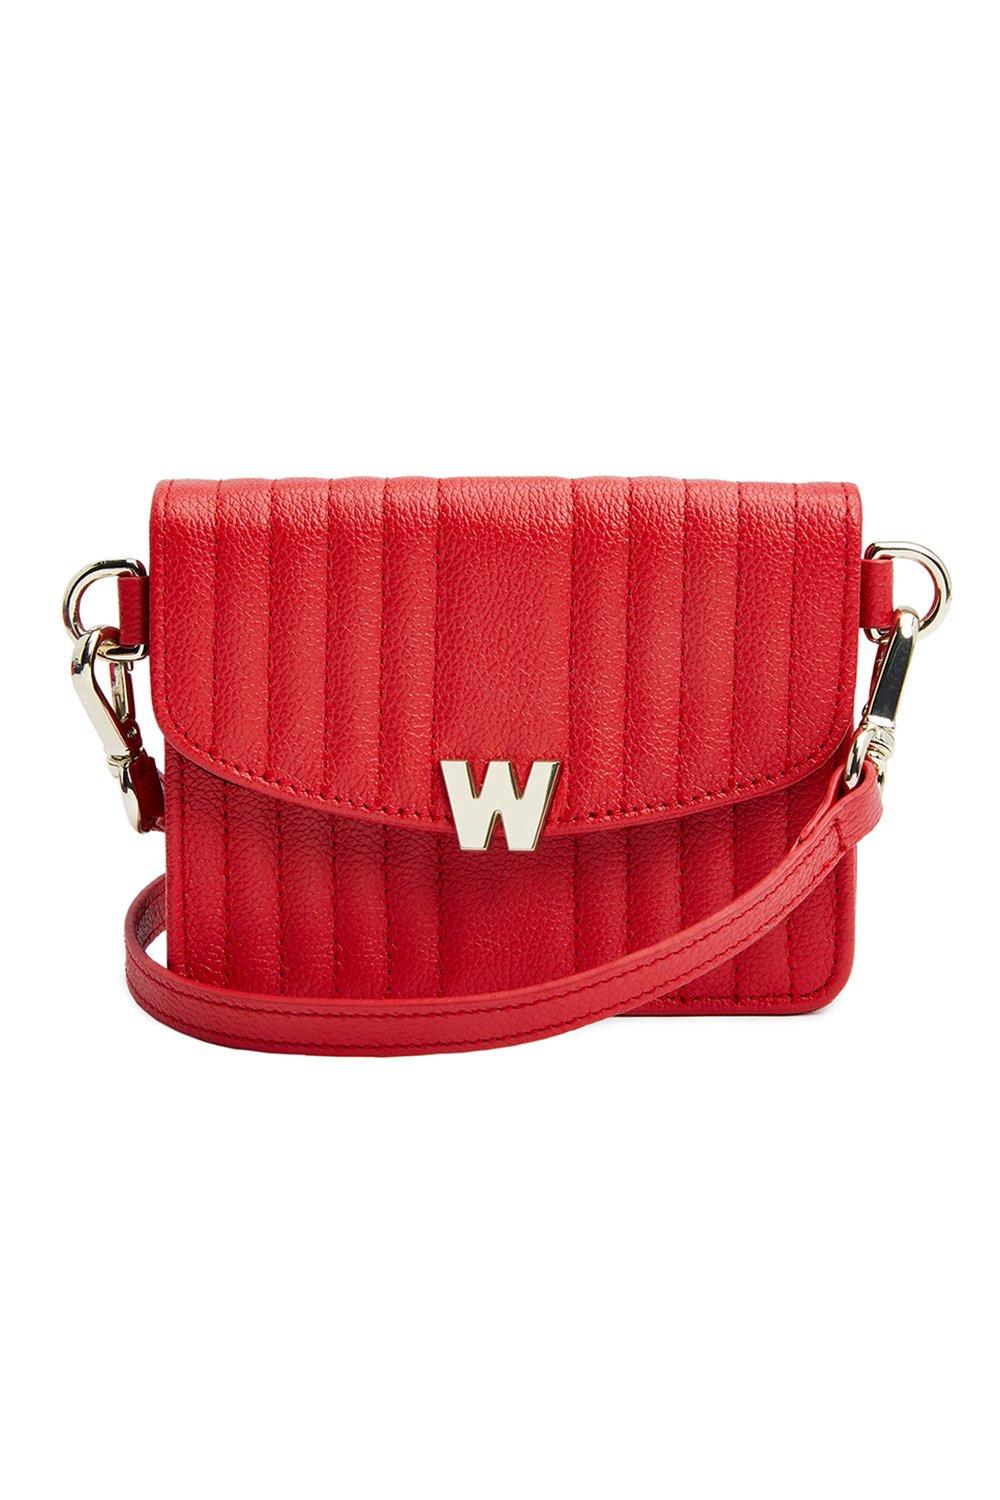 Мини-сумка Mimi с ремешком и ремешком WOLF, красный